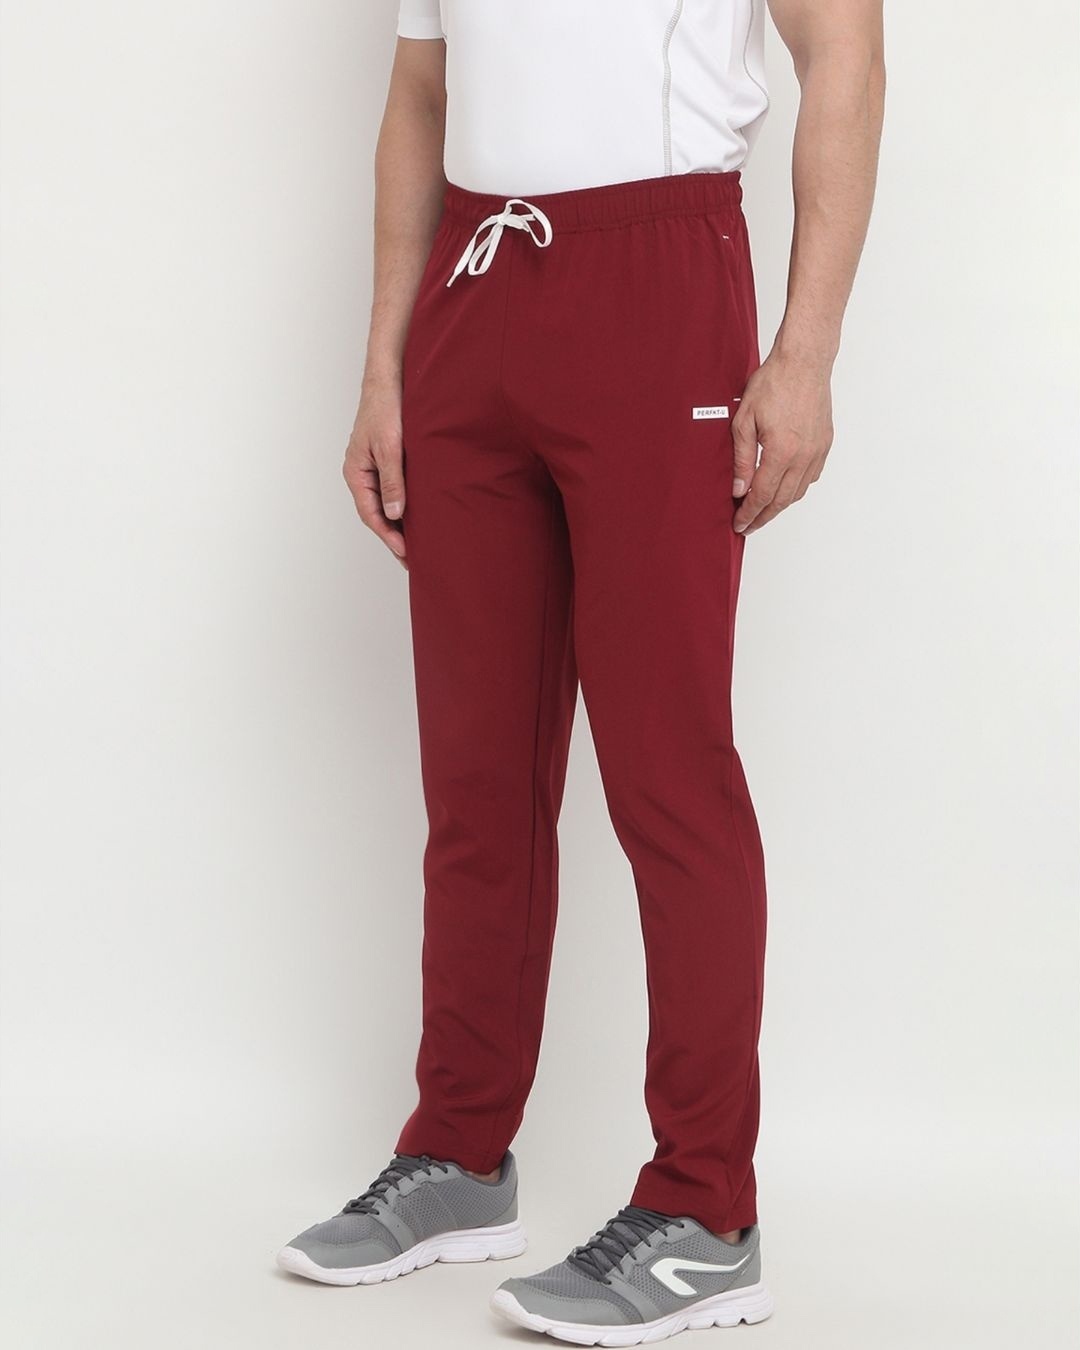 Shop Men's Maroon Polyester Track Pants